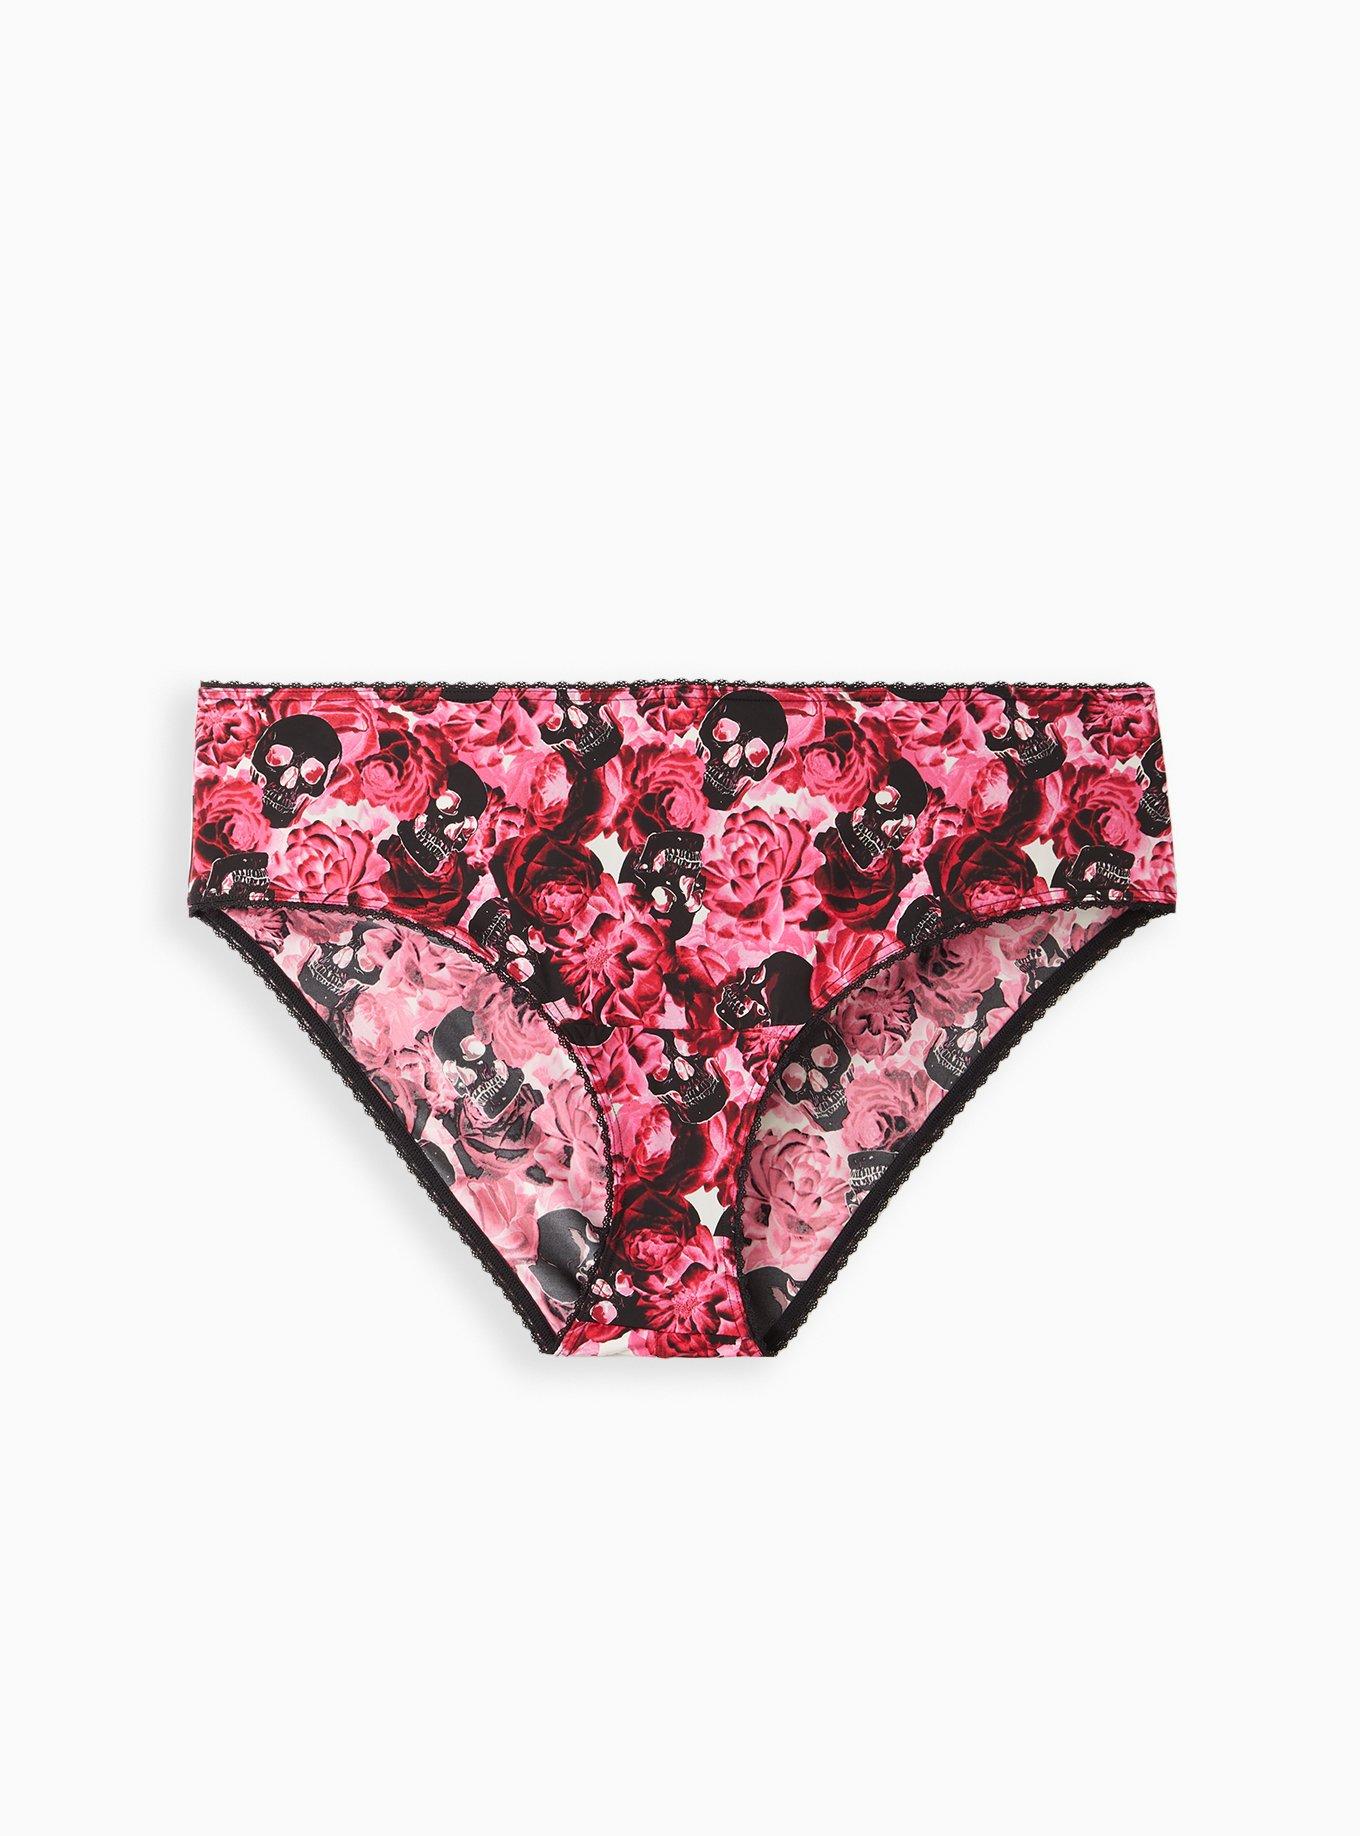 Blush Lingerie Hipster Panties - Flora on Sale